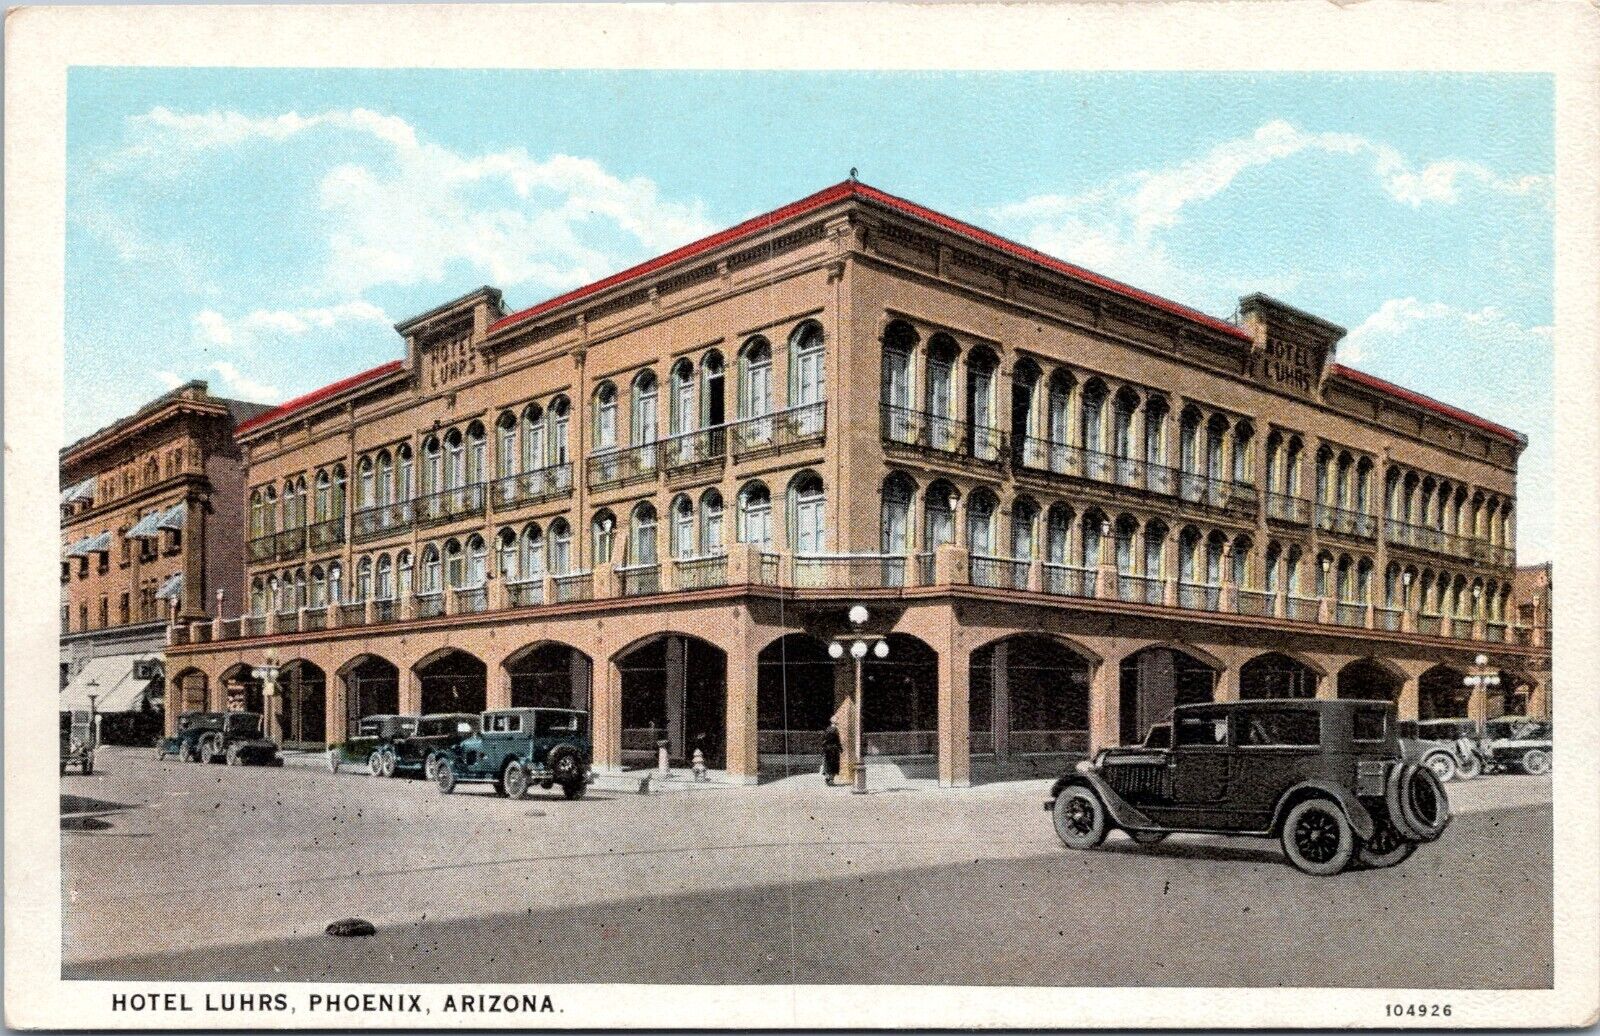 Hotel Luhrs, Phoenix Arizona - 1925 White Border Postcard - Old Cars- Curt Teich